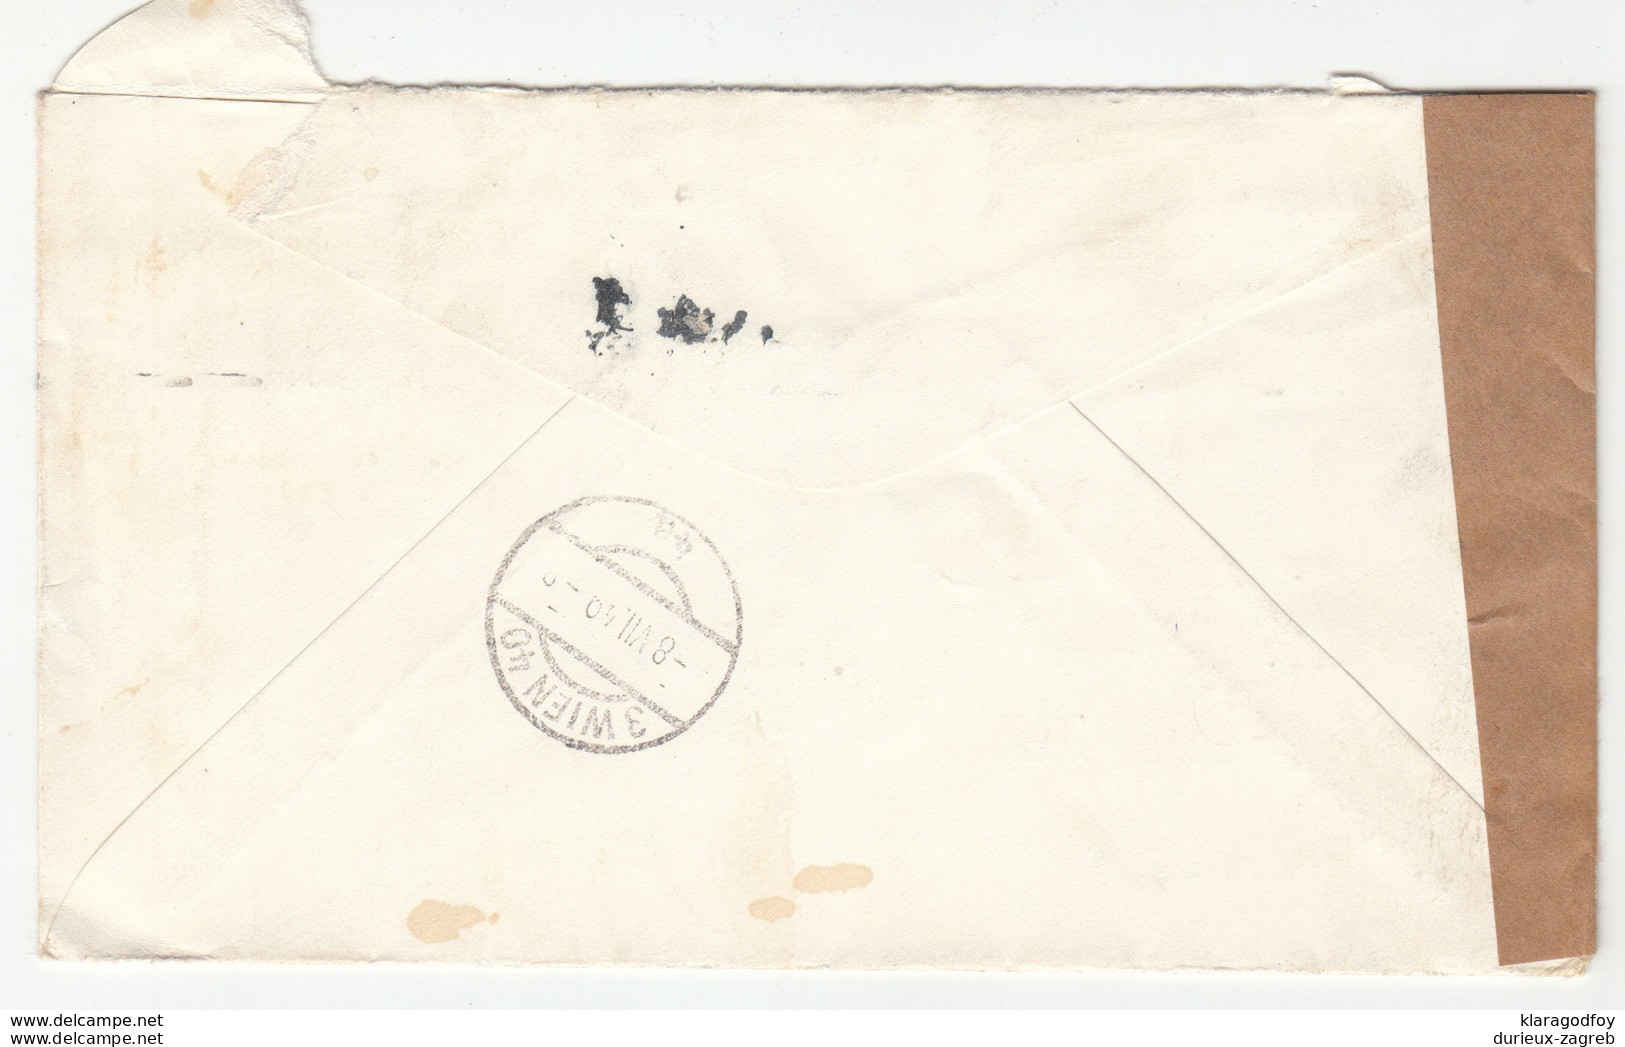 Cuba Censored Air Mail Letter Travelled 1949 To Austria B170925 - Poste Aérienne